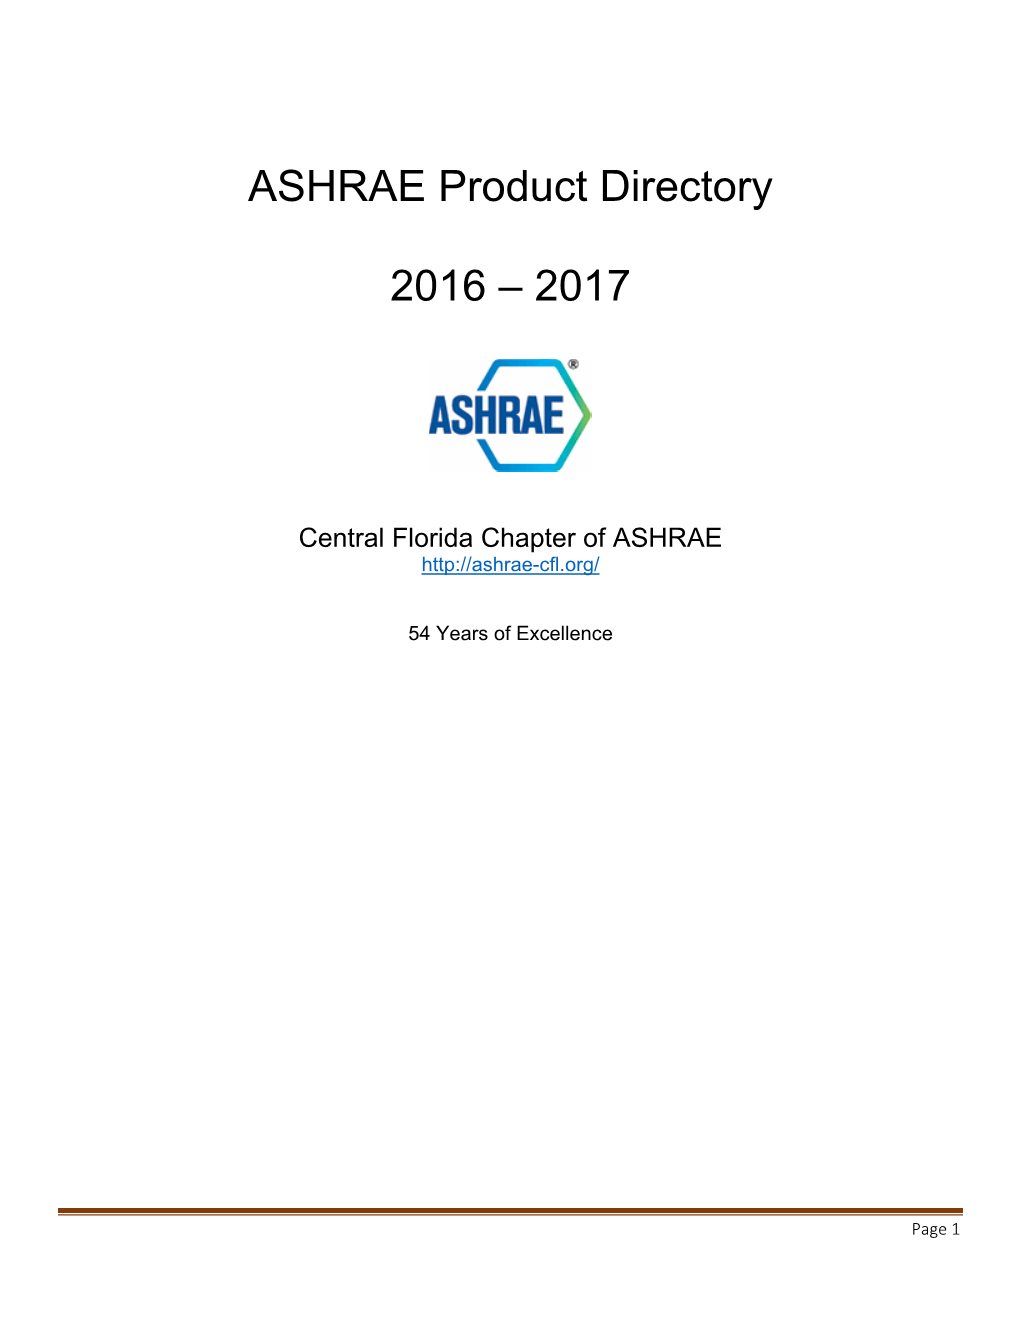 ASHRAE Product Directory 2016 – 2017